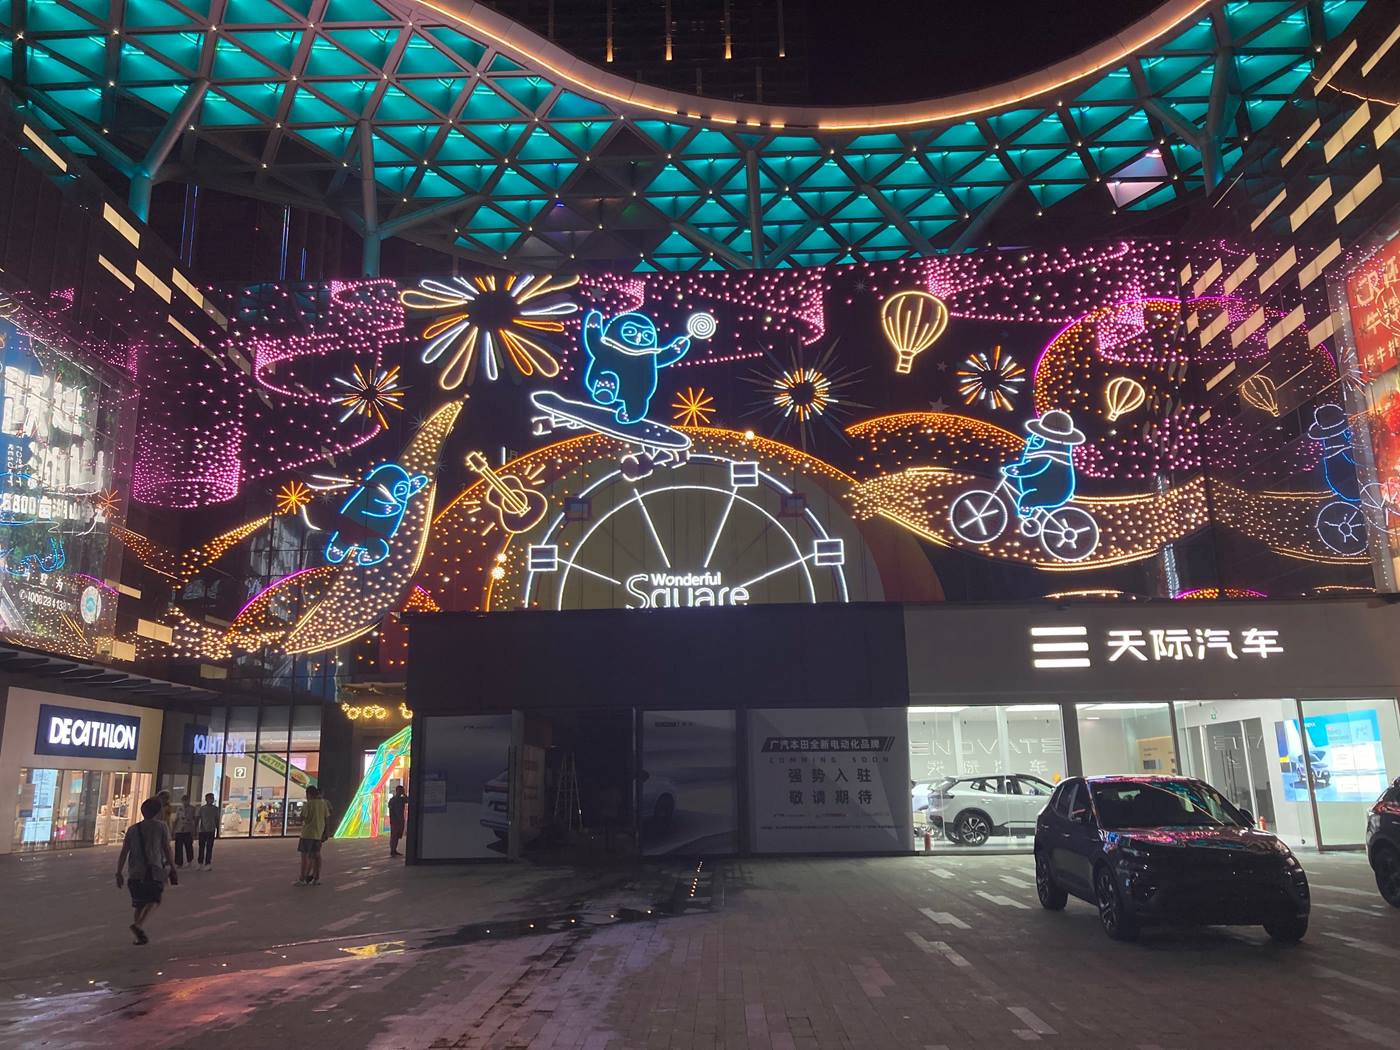 Illuminated shopping center in downtown Shunde